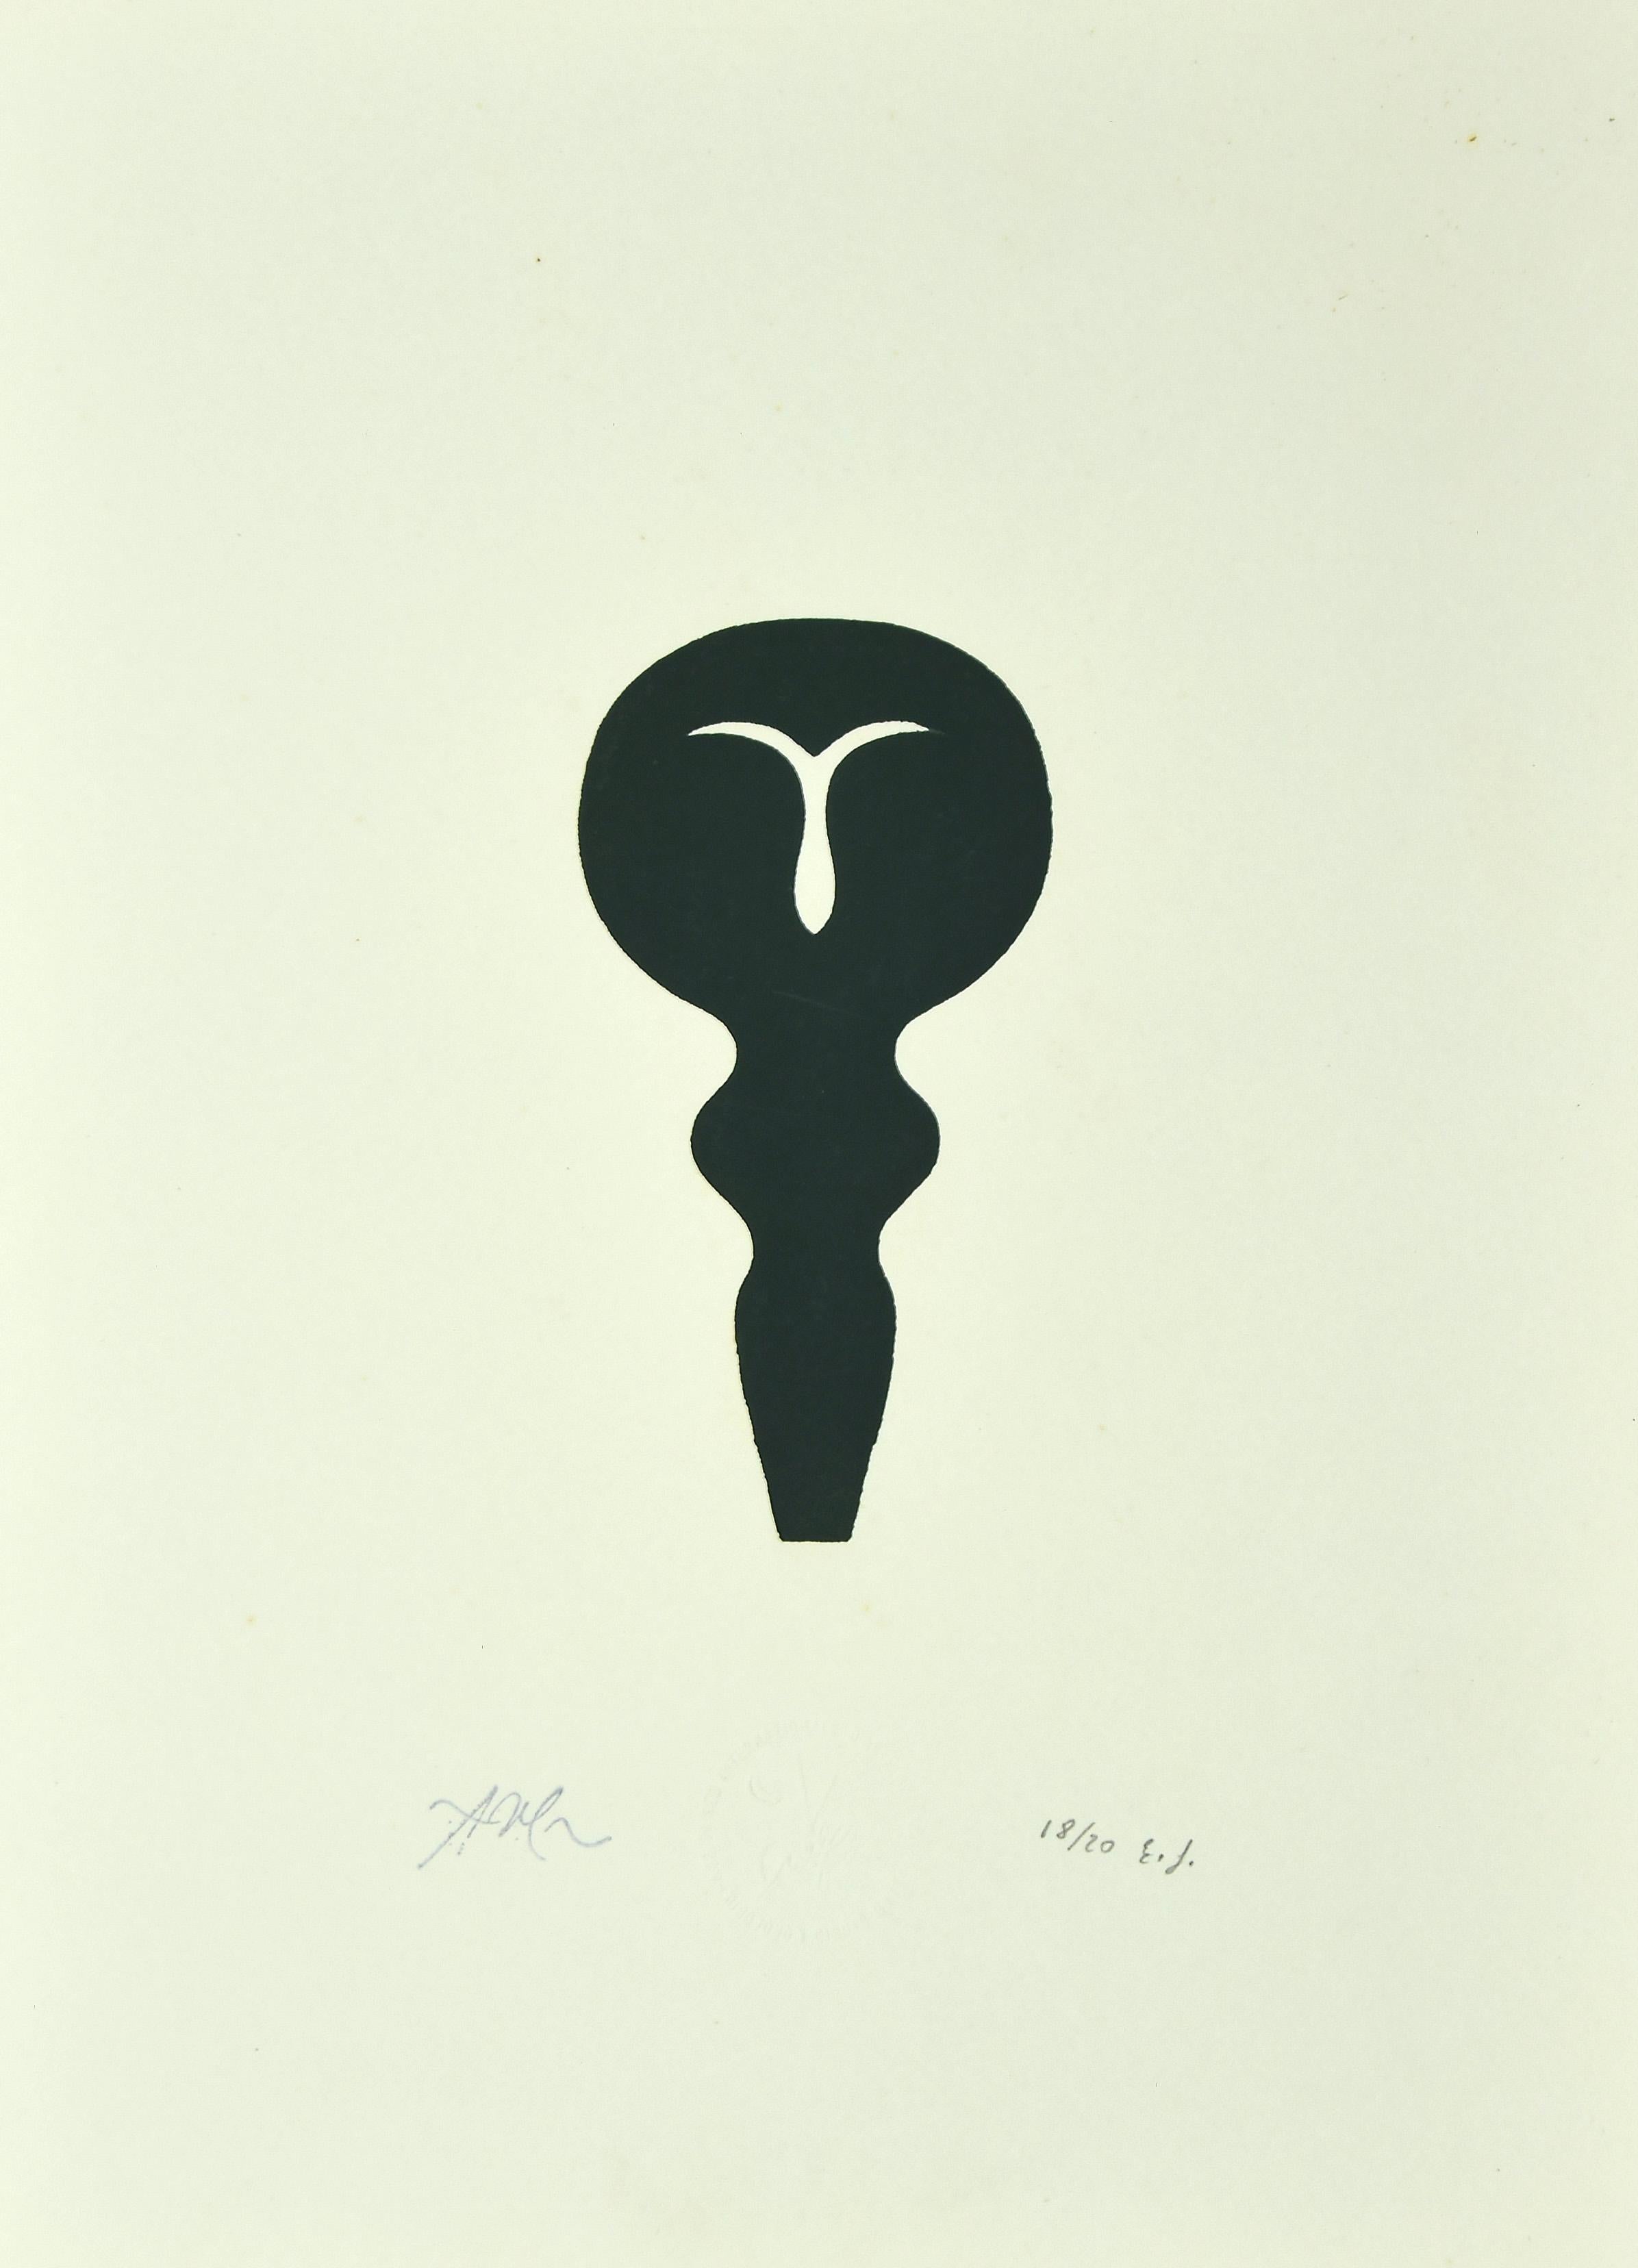 Jean Arp Abstract Print - Black Composition (Idol) - Original Screen Print by Jean Hans Arp - 1970s